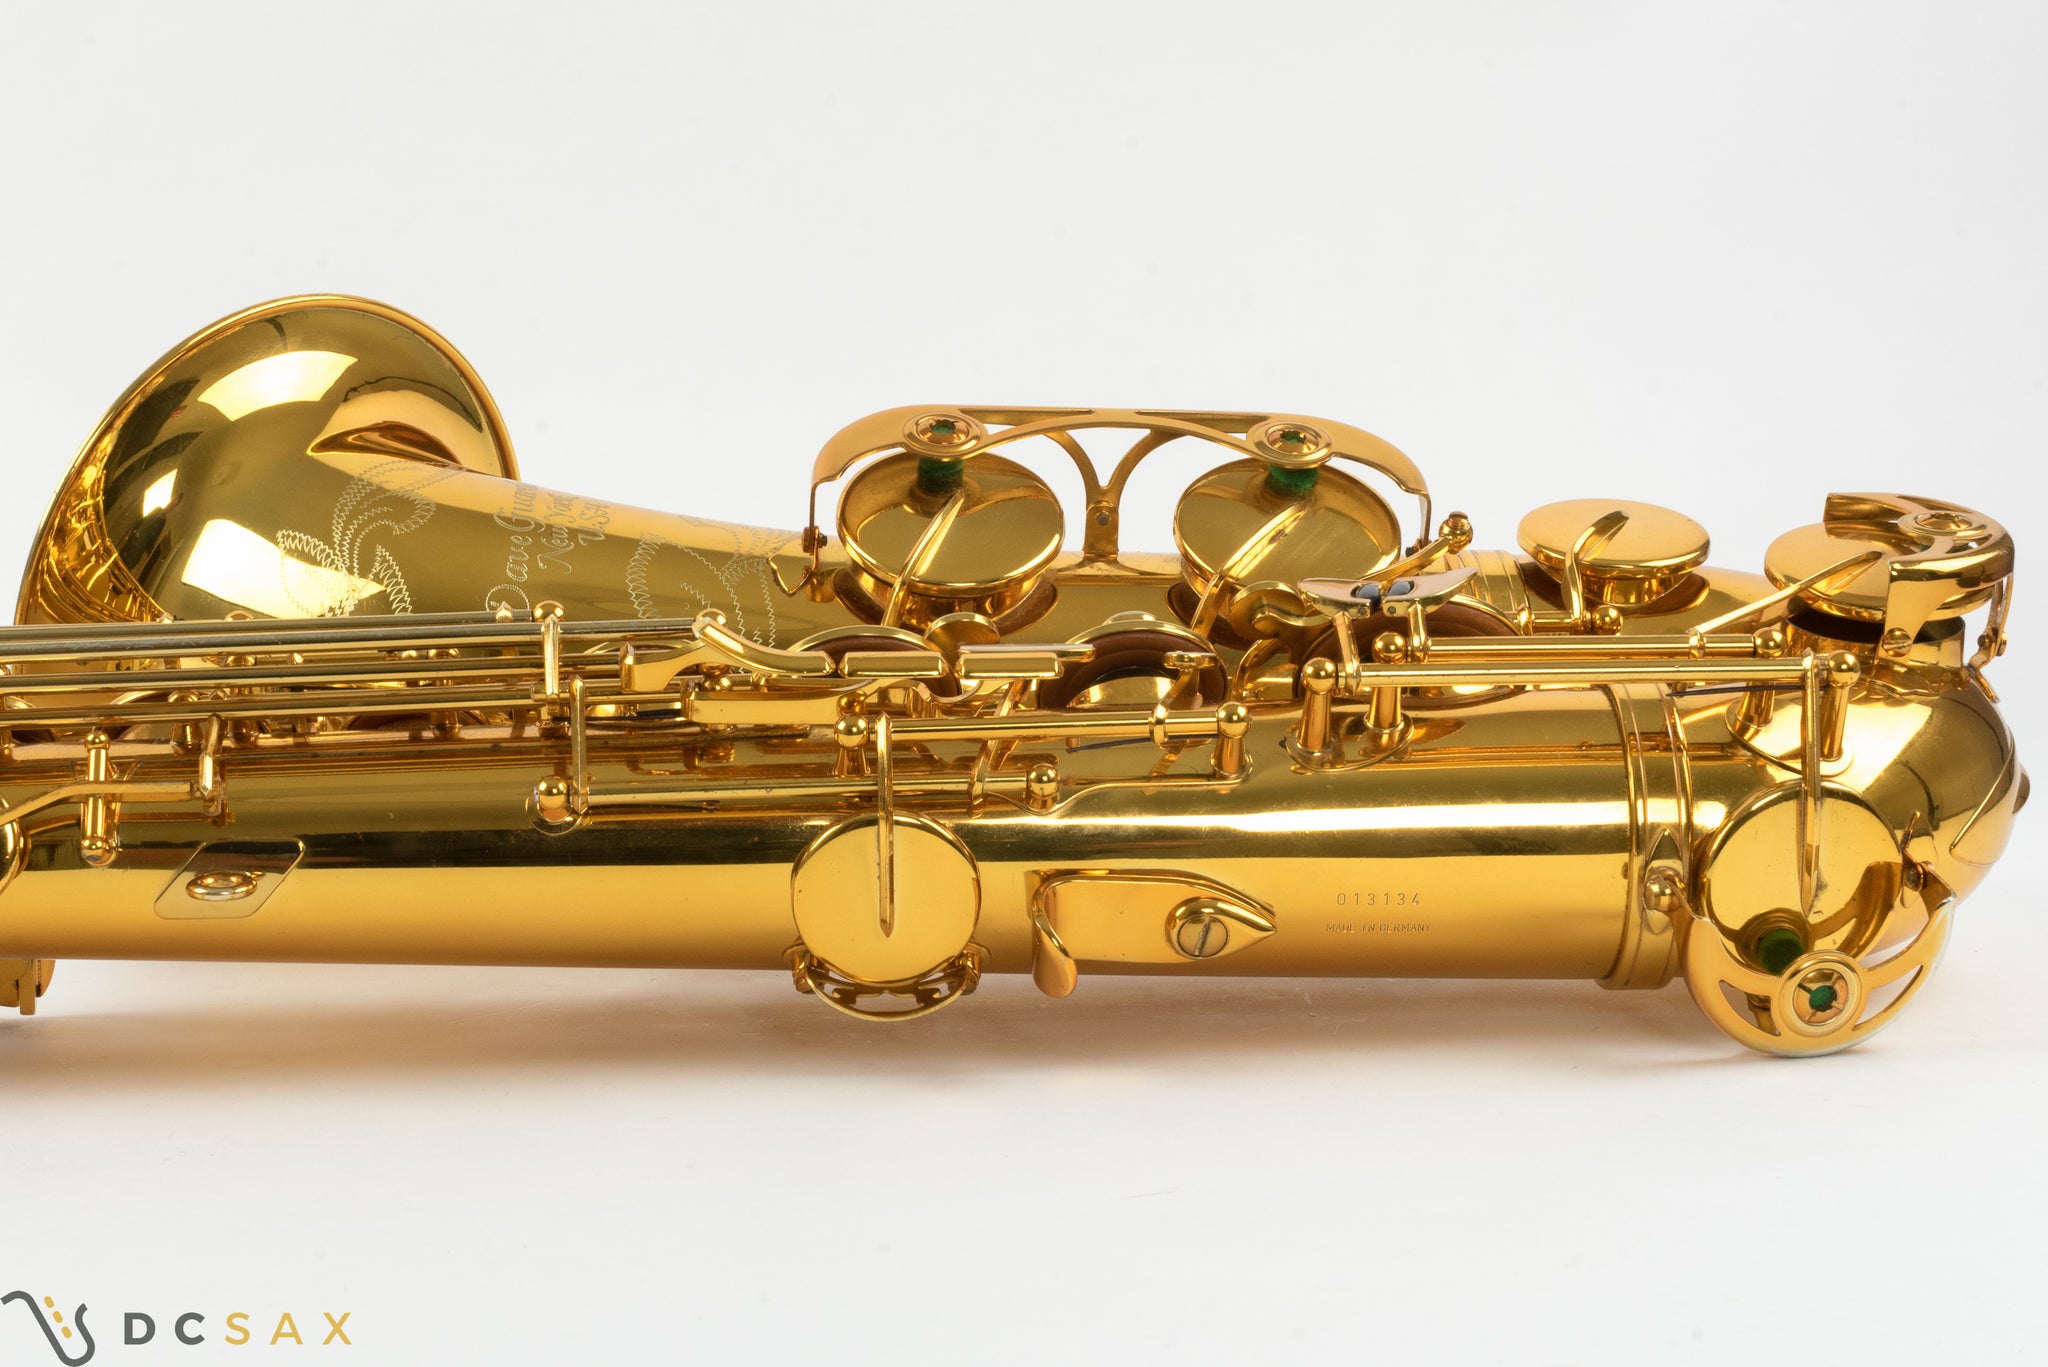 Dave Guardala Tenor Saxophone, Gold Plated, Video